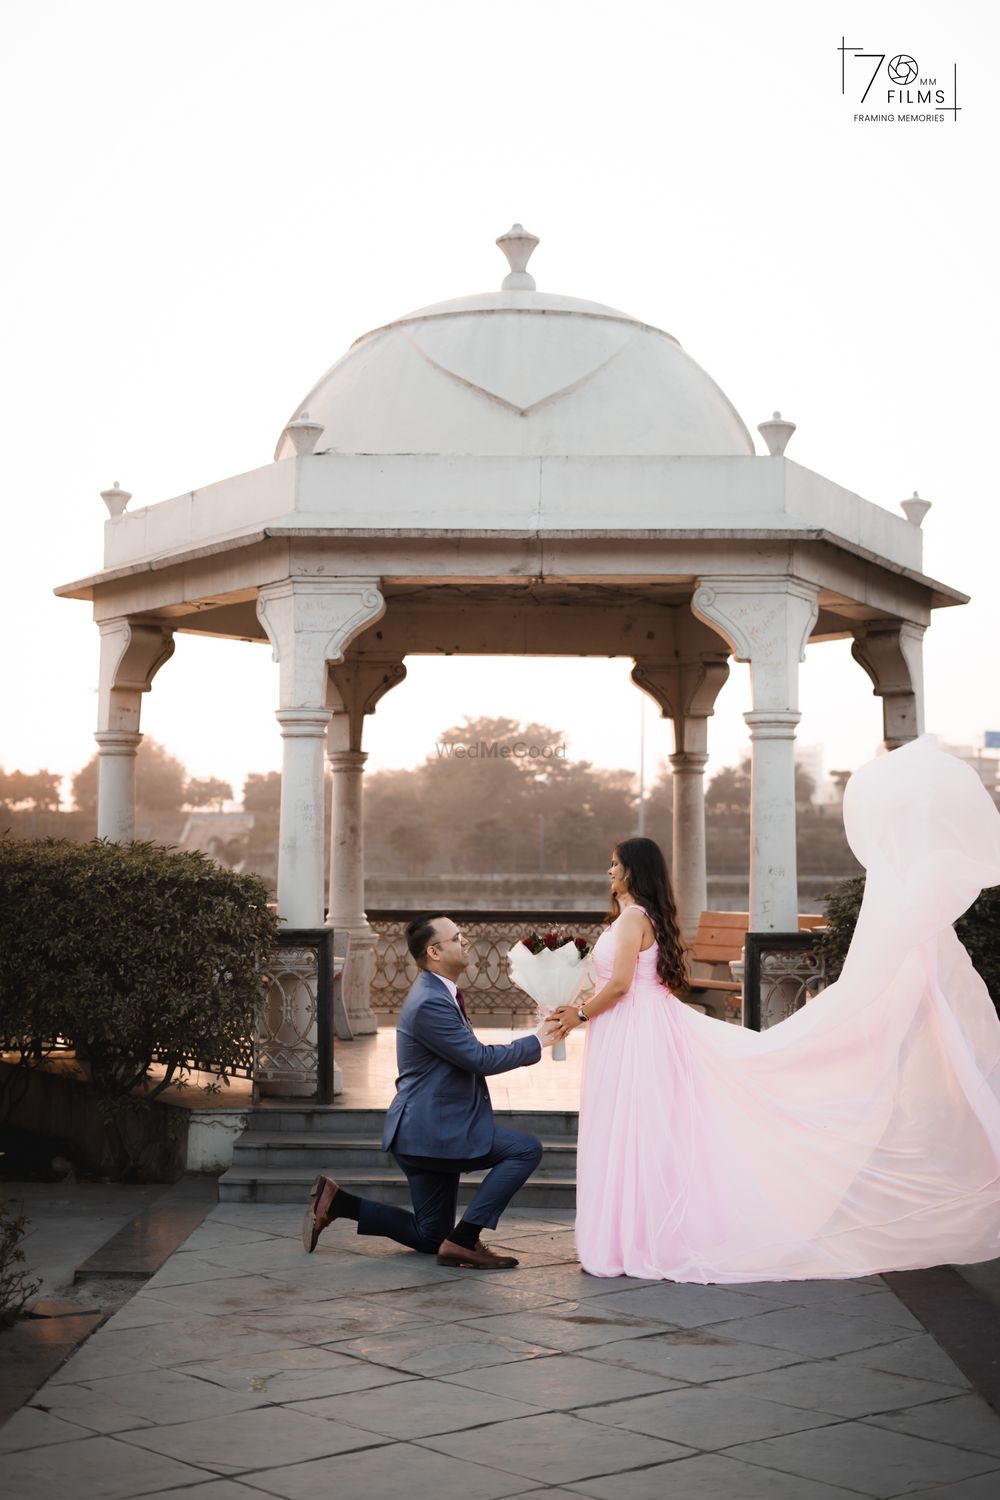 Photo From Prewedding  || Durgesh & Pooja || - By 70MM Films